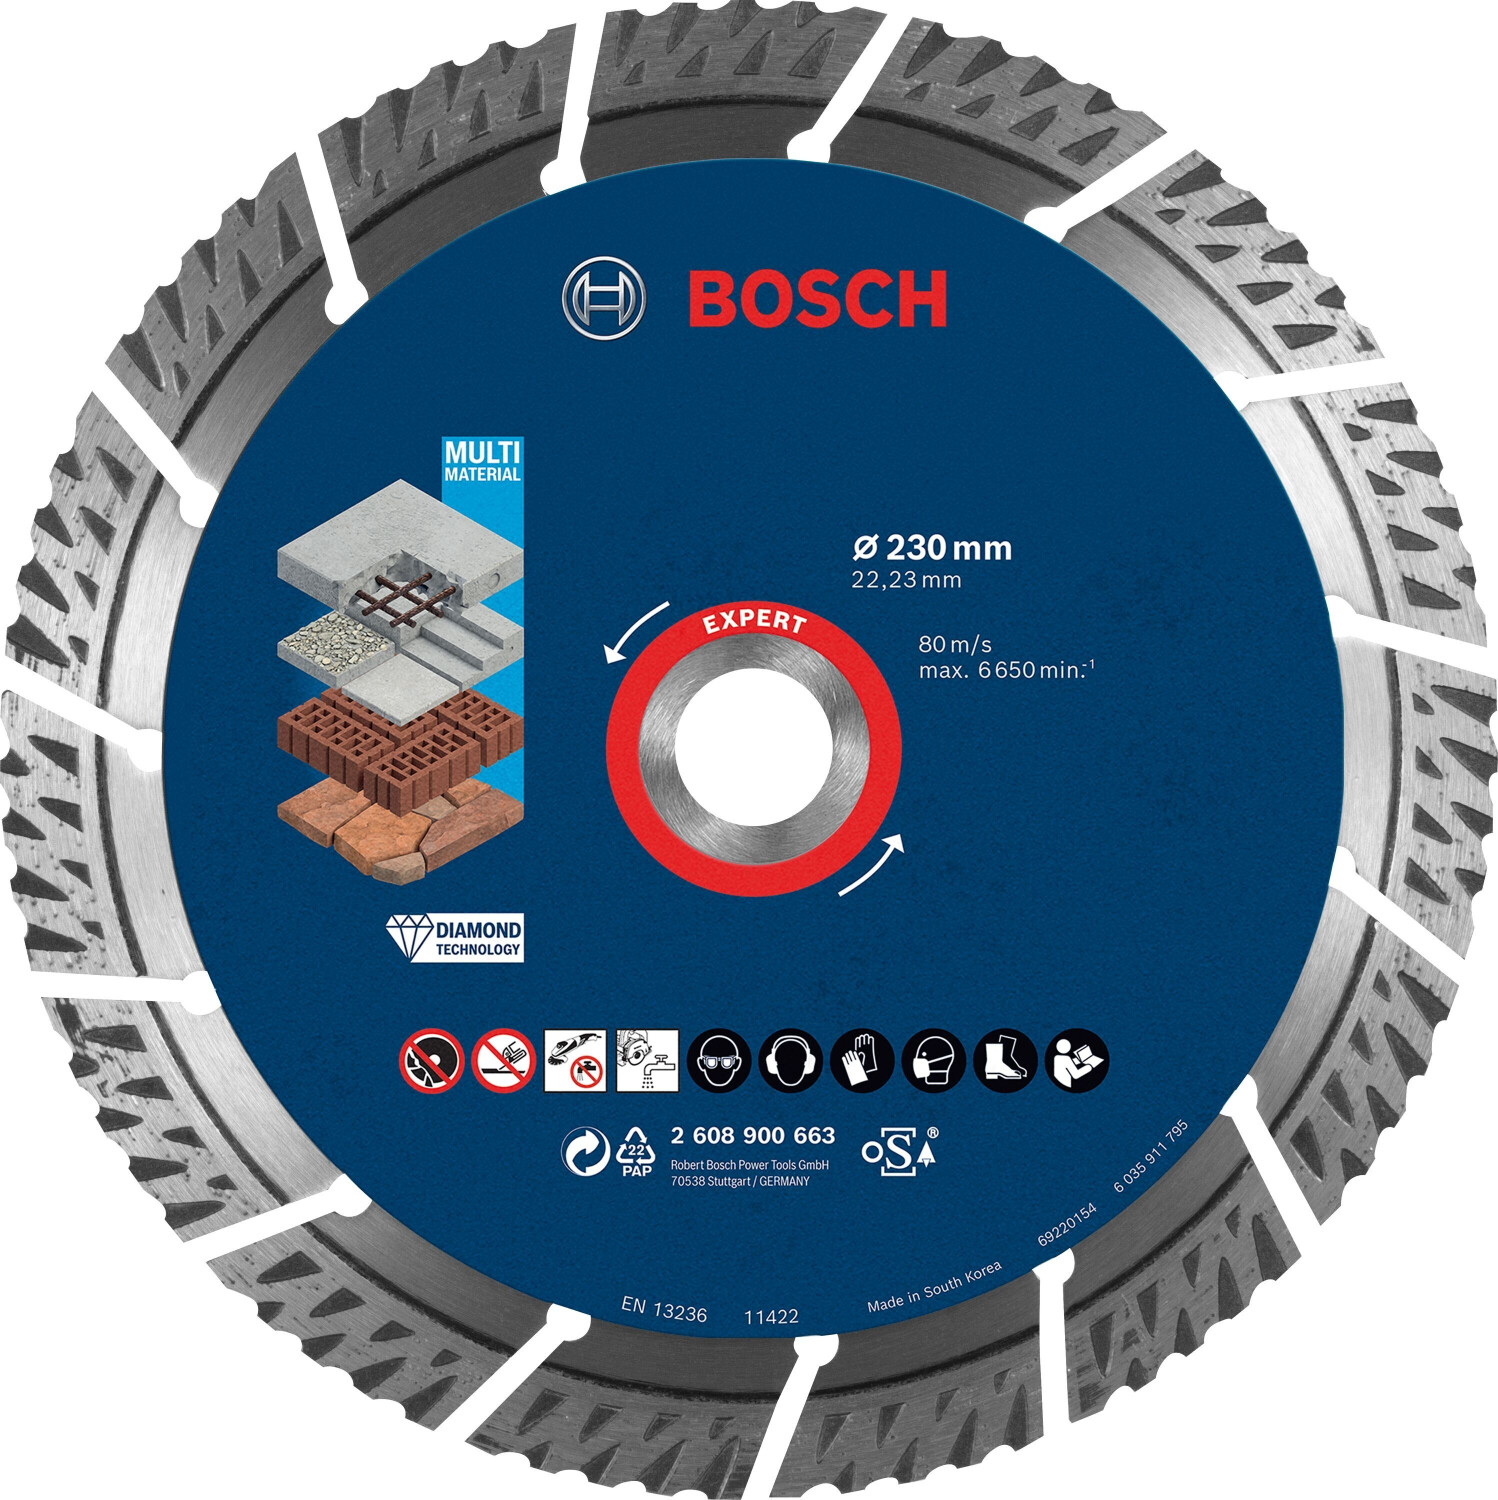 Bosch Accessories Expert MultiMaterial 230 | bei x Preisvergleich mm 64,00 € (2608900663) ab x 2,4 22,23